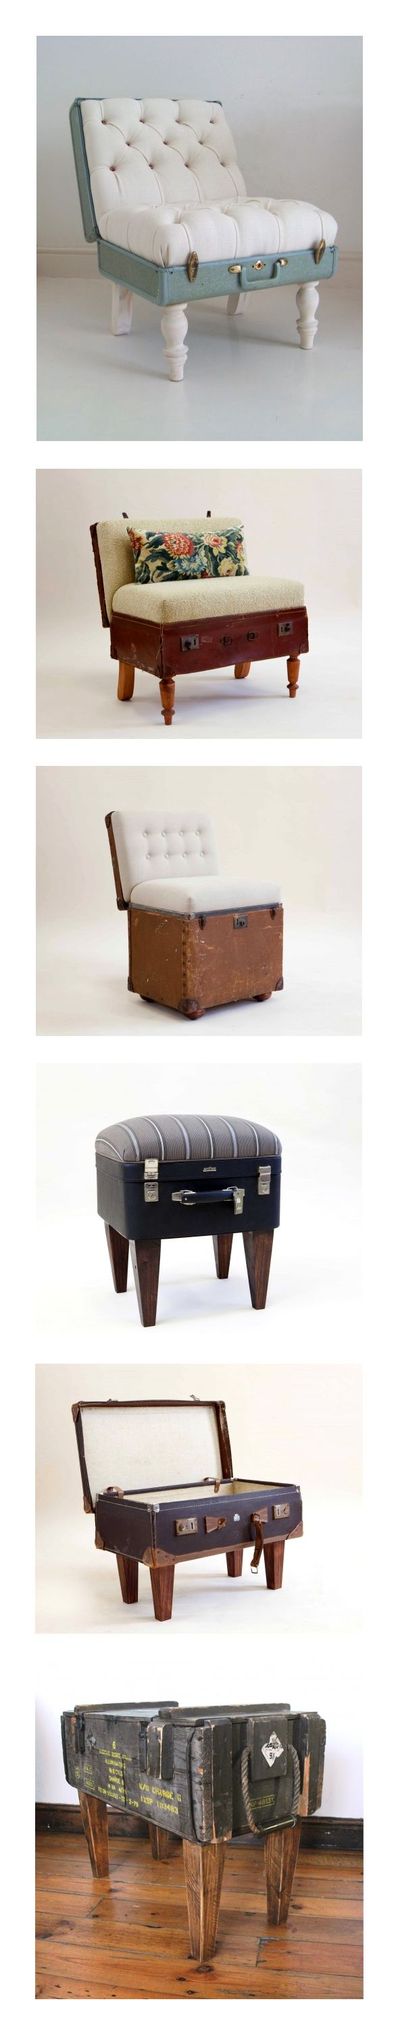 Vintage-Suitcases-interior-34